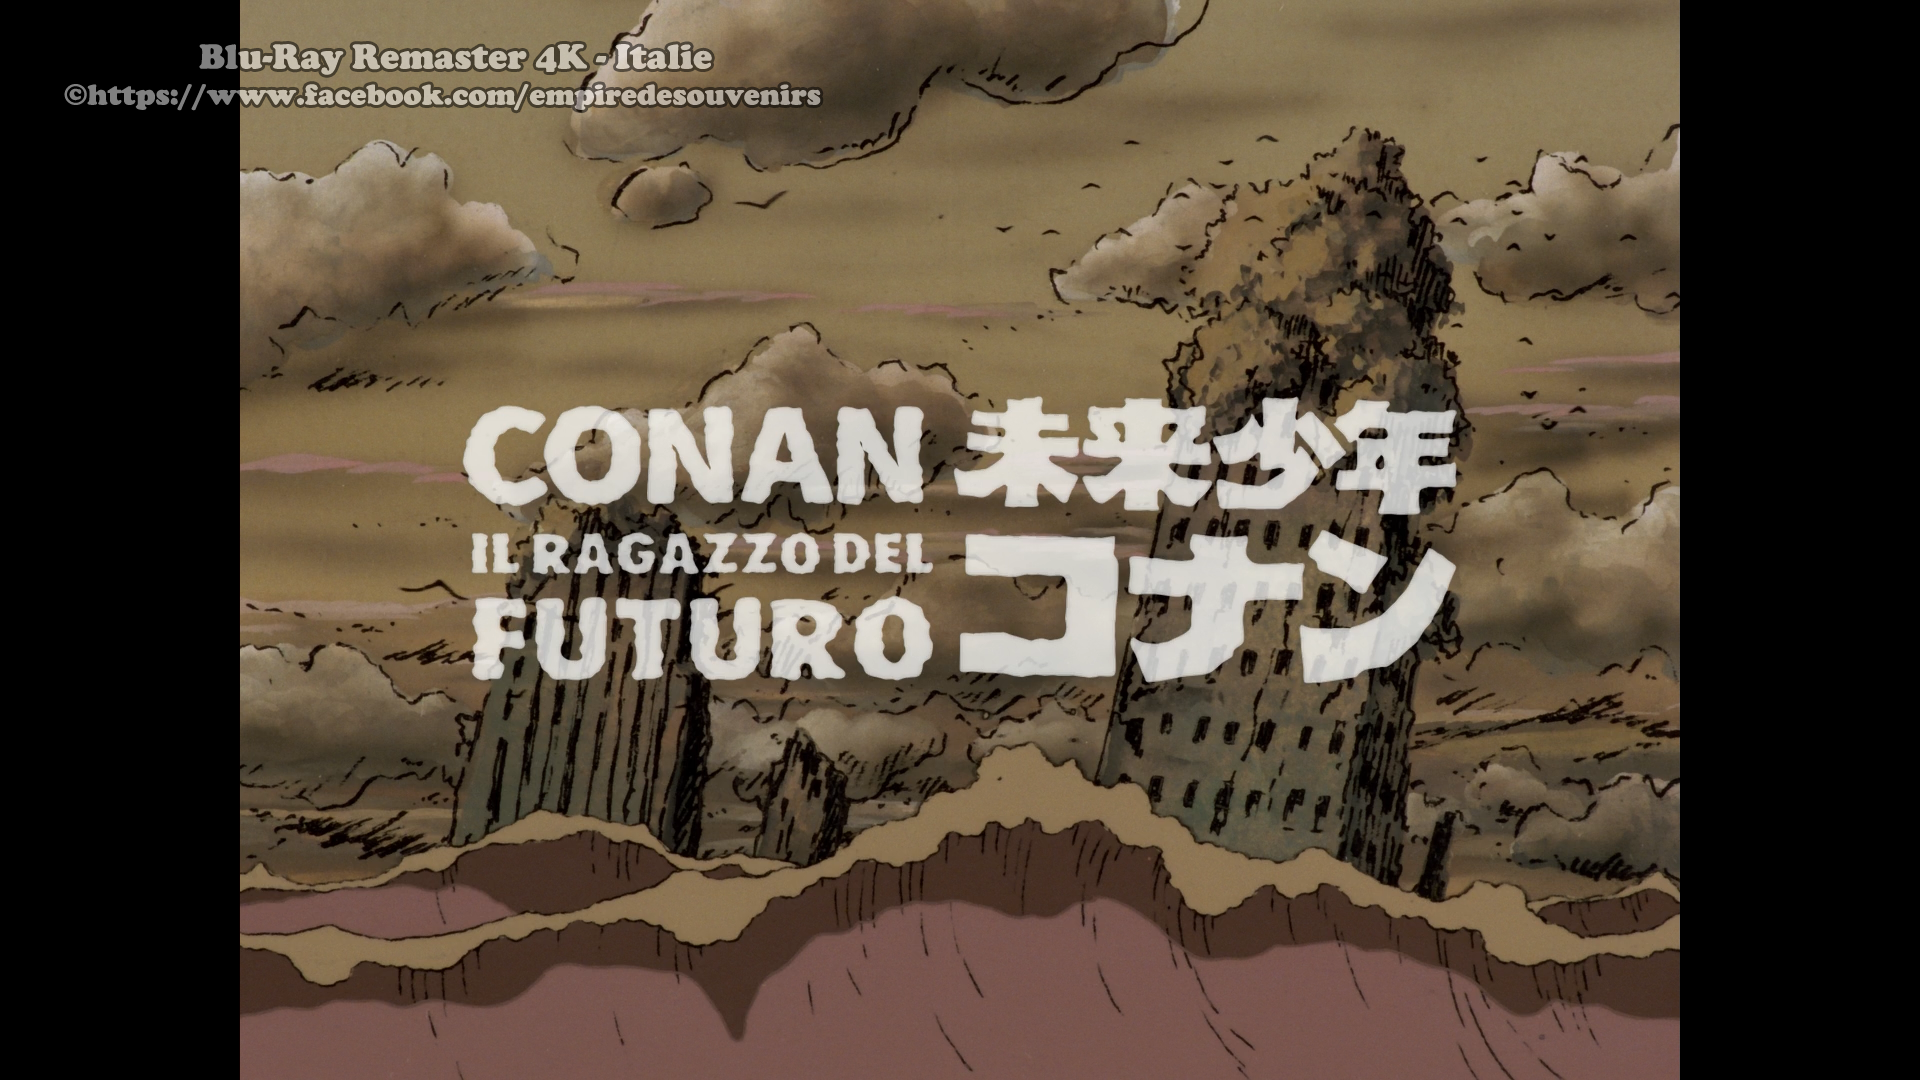 [Import] Conan le fils du futur, test Blu-ray 3dui